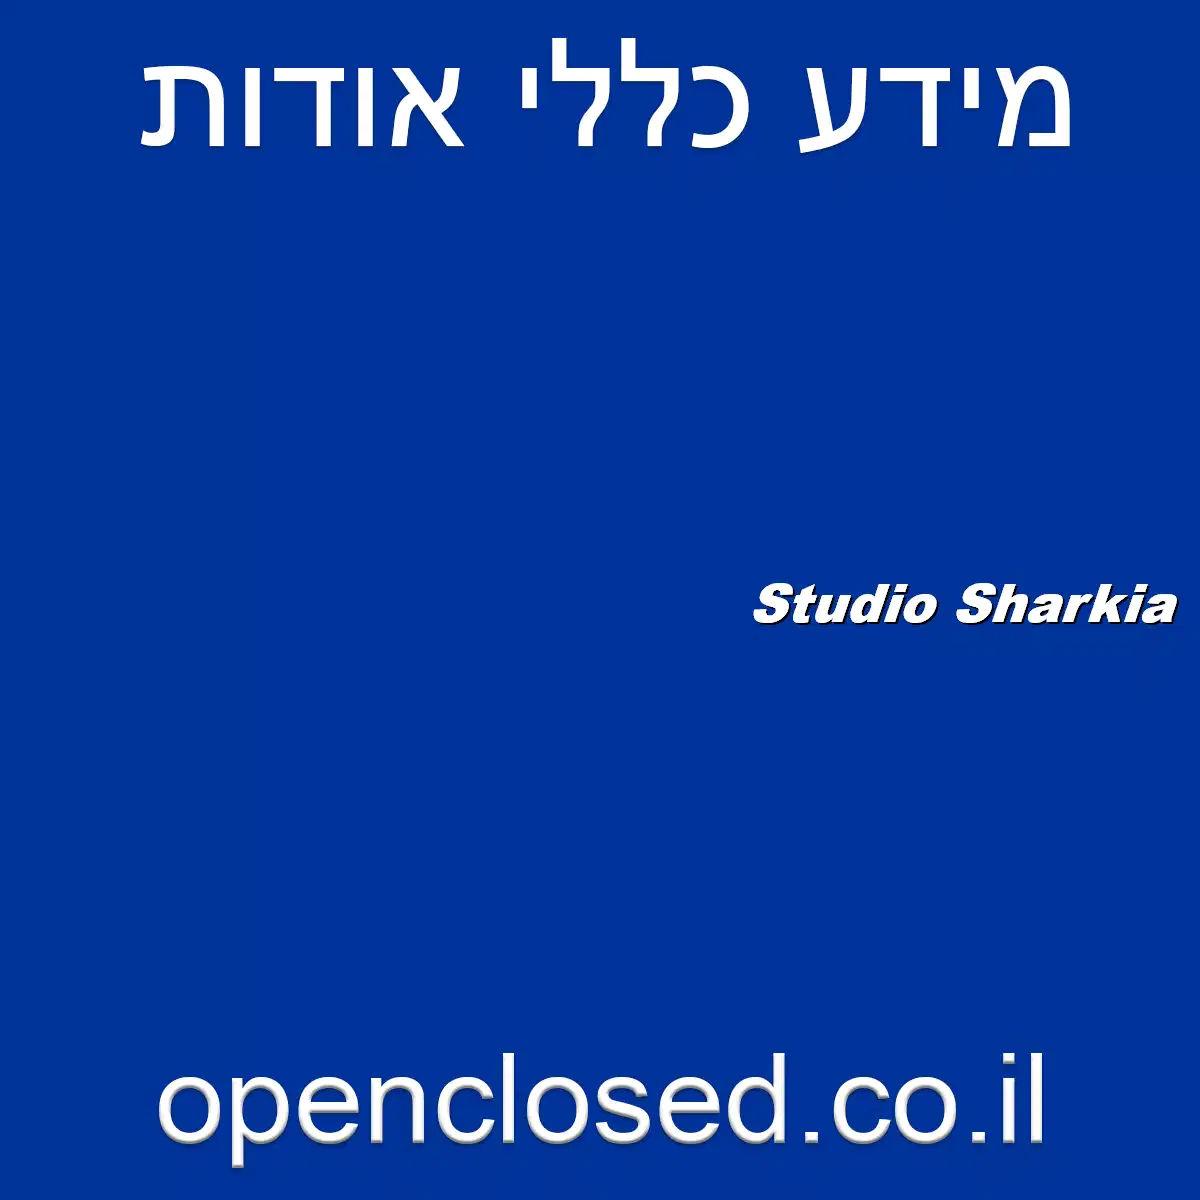 Studio Sharkia